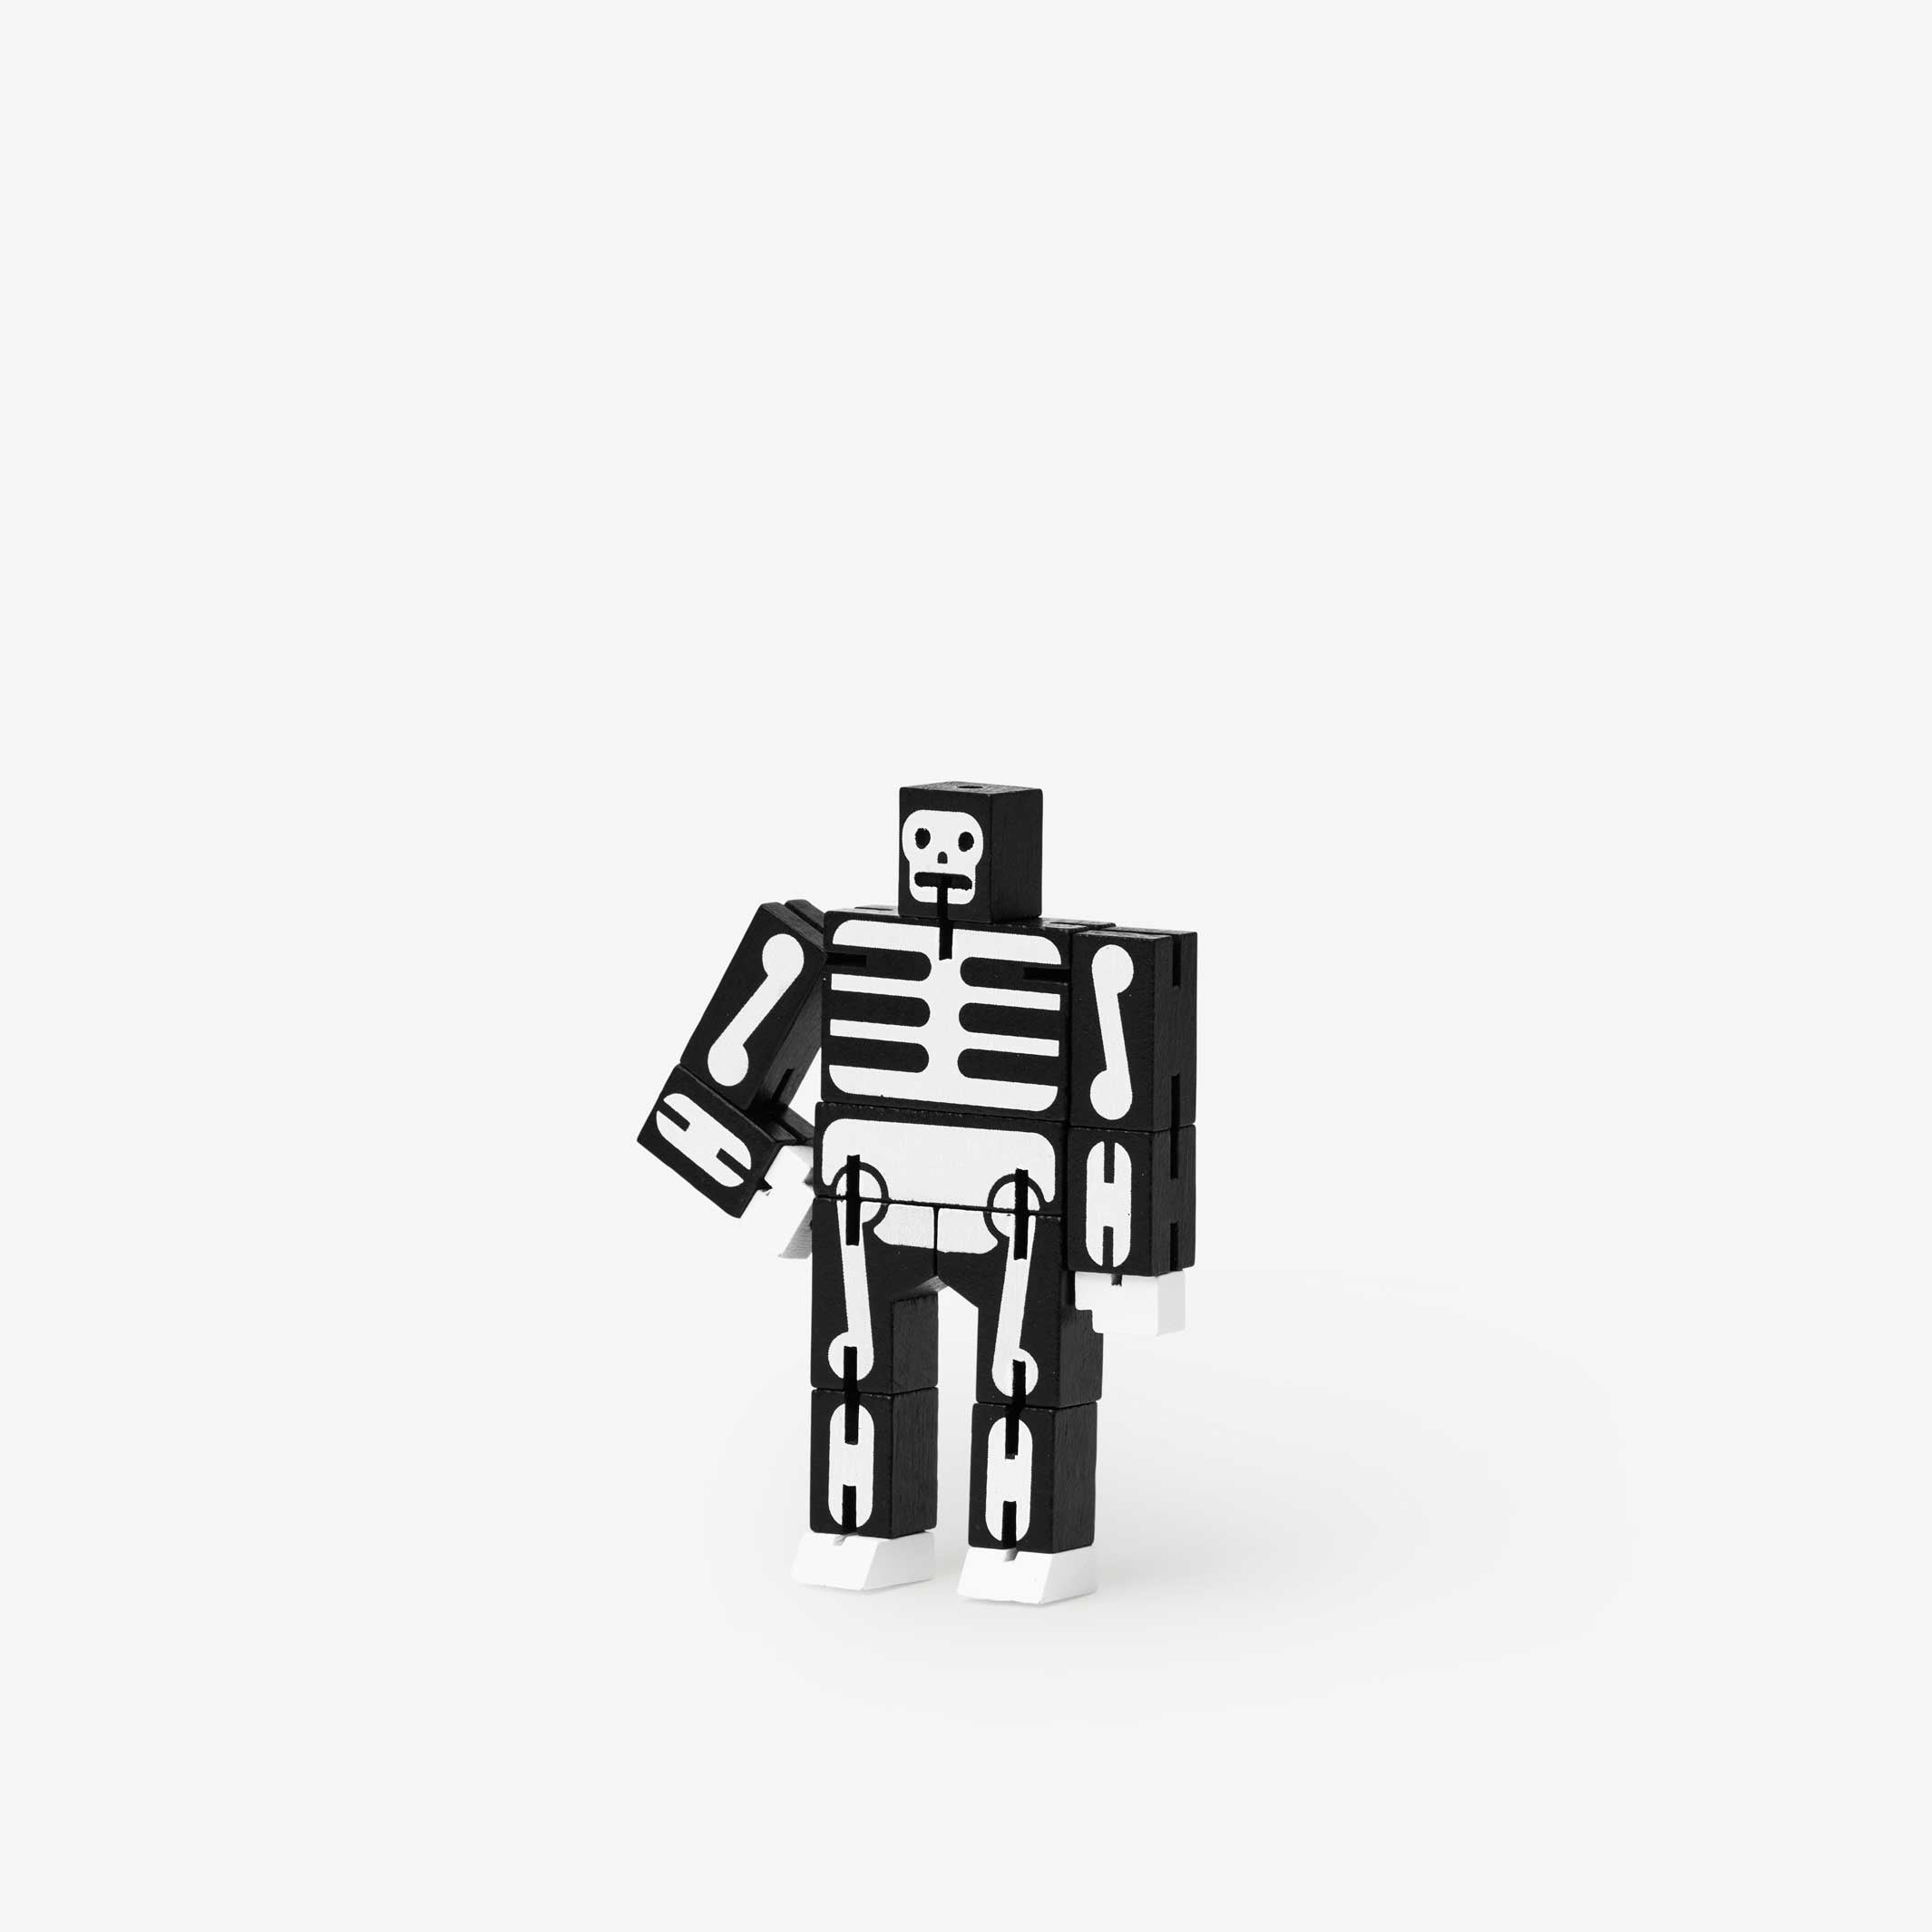 CUBEBOT® Micro SKELETT | 3D PUZZLE ROBOTER | David Weeks | Areaware